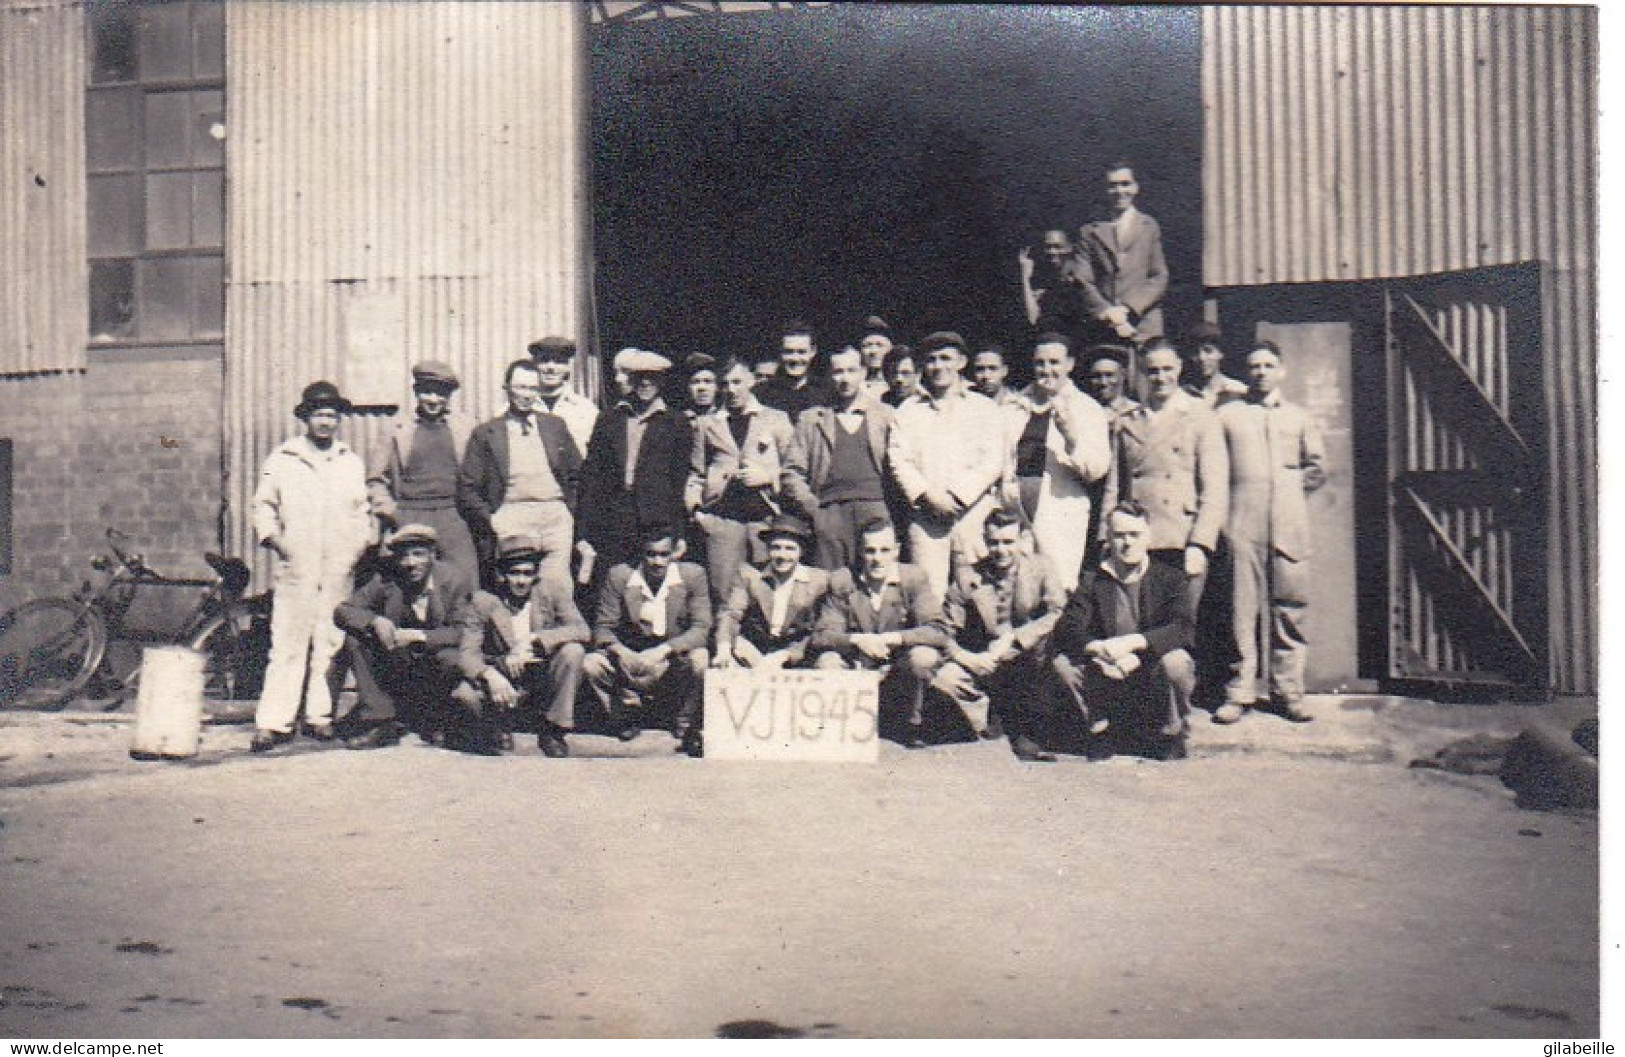 South Africa - Taken V-J Day At Simon's Town 15/08/1945 - The Harbour -  Boiler Shop Afloat - Afrika